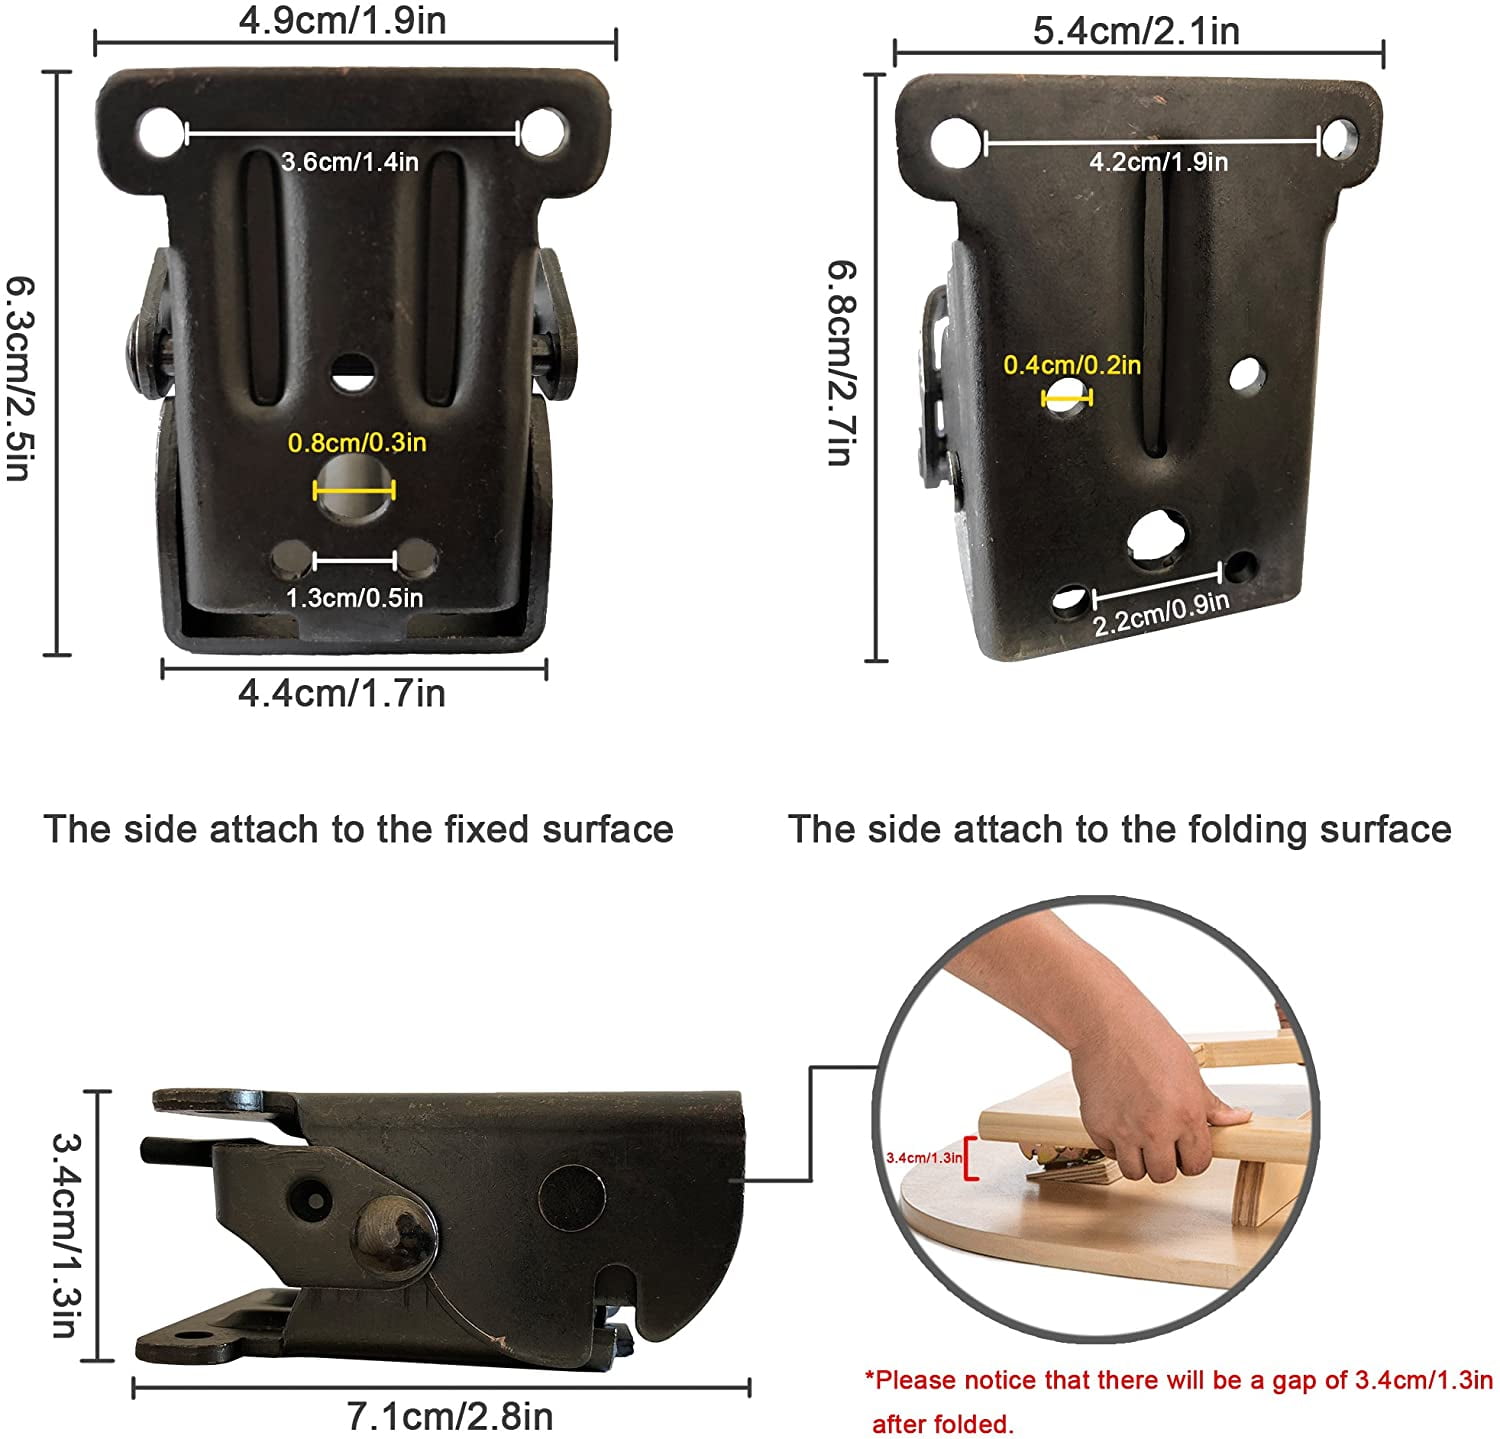 Workbench Skelang Foldable Bracket Self-Lock Hinge Hardware with Screws Lock Extension Support for Table Leg Bed Leg Pack of 4 